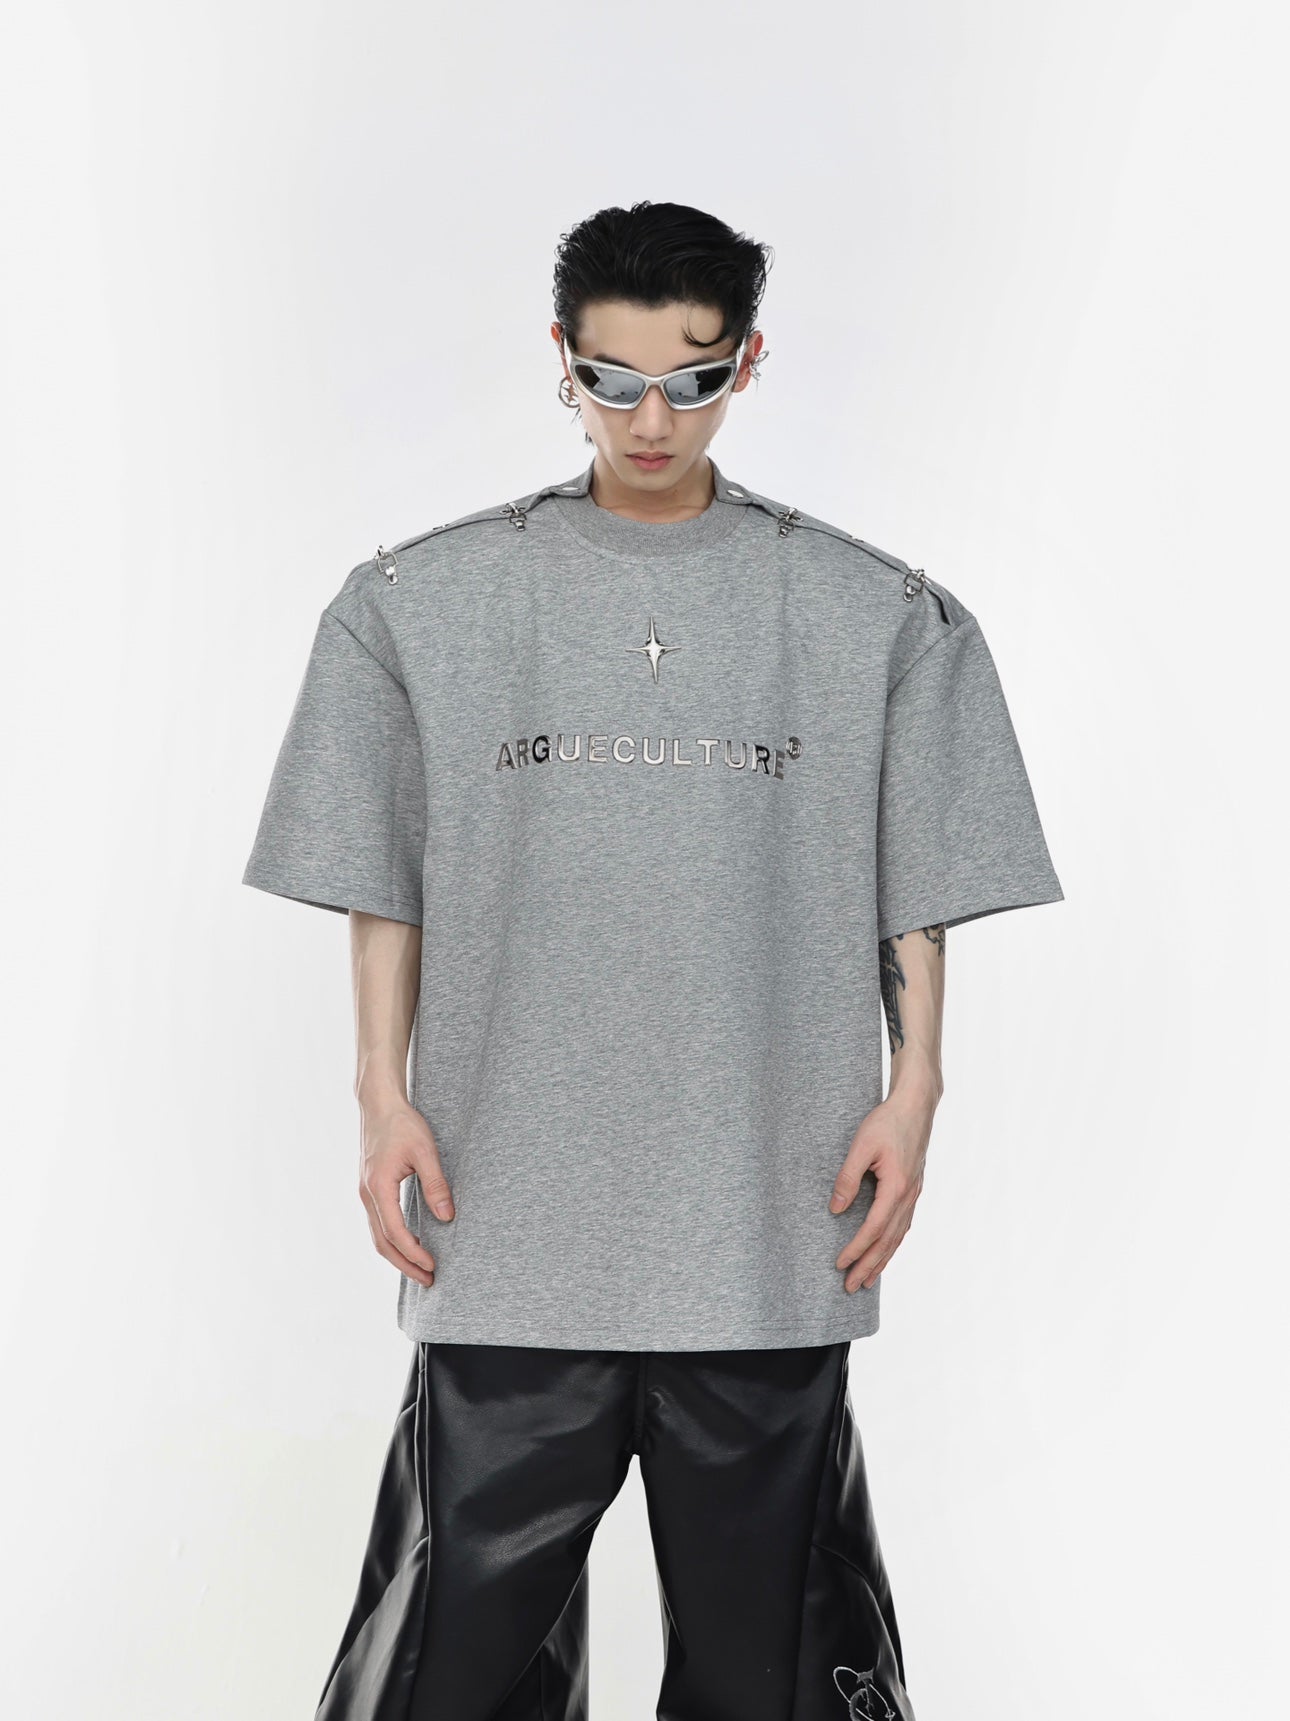 Metal Airplane Buckle T-Shirt Korean Street Fashion T-Shirt By Argue Culture Shop Online at OH Vault